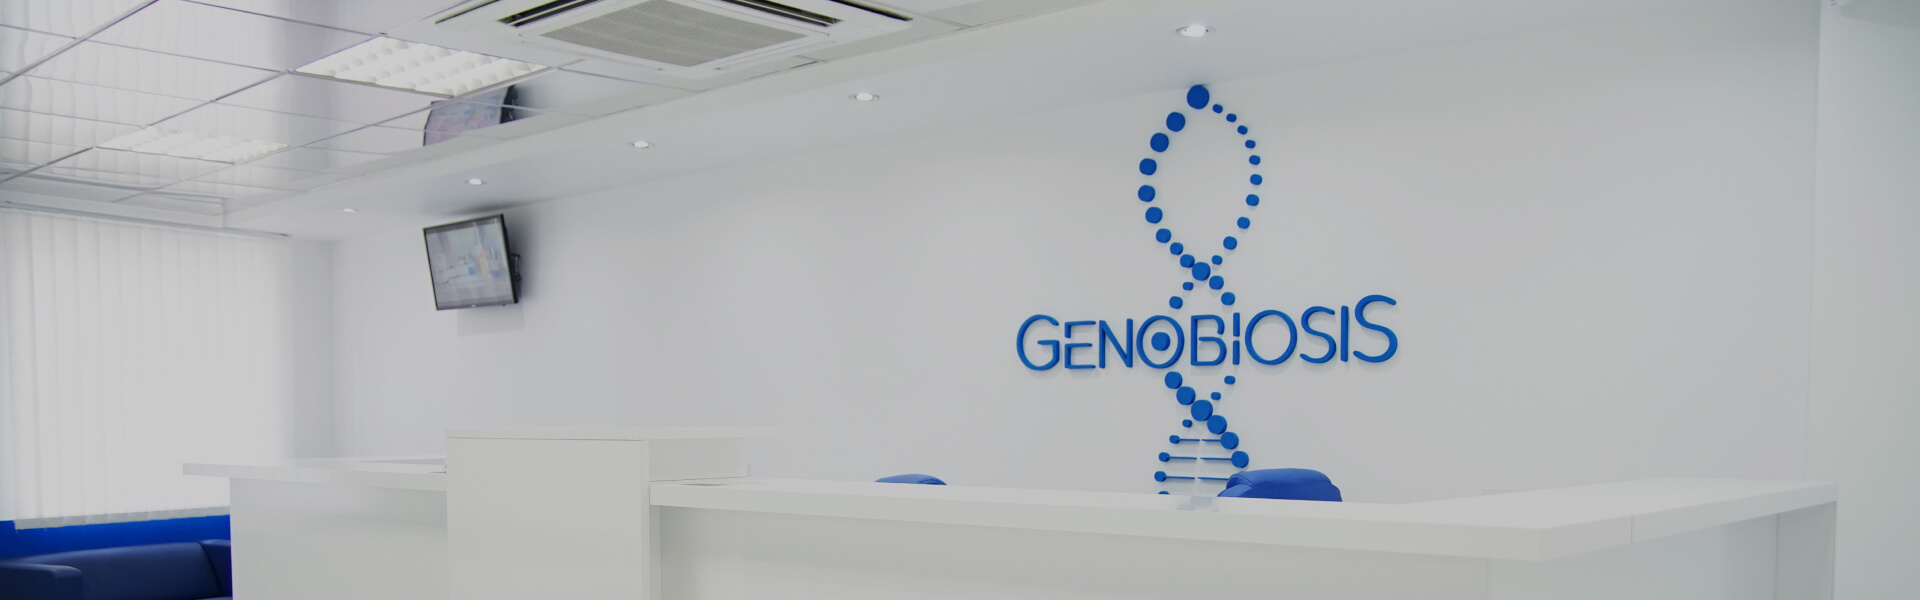 genobiosis